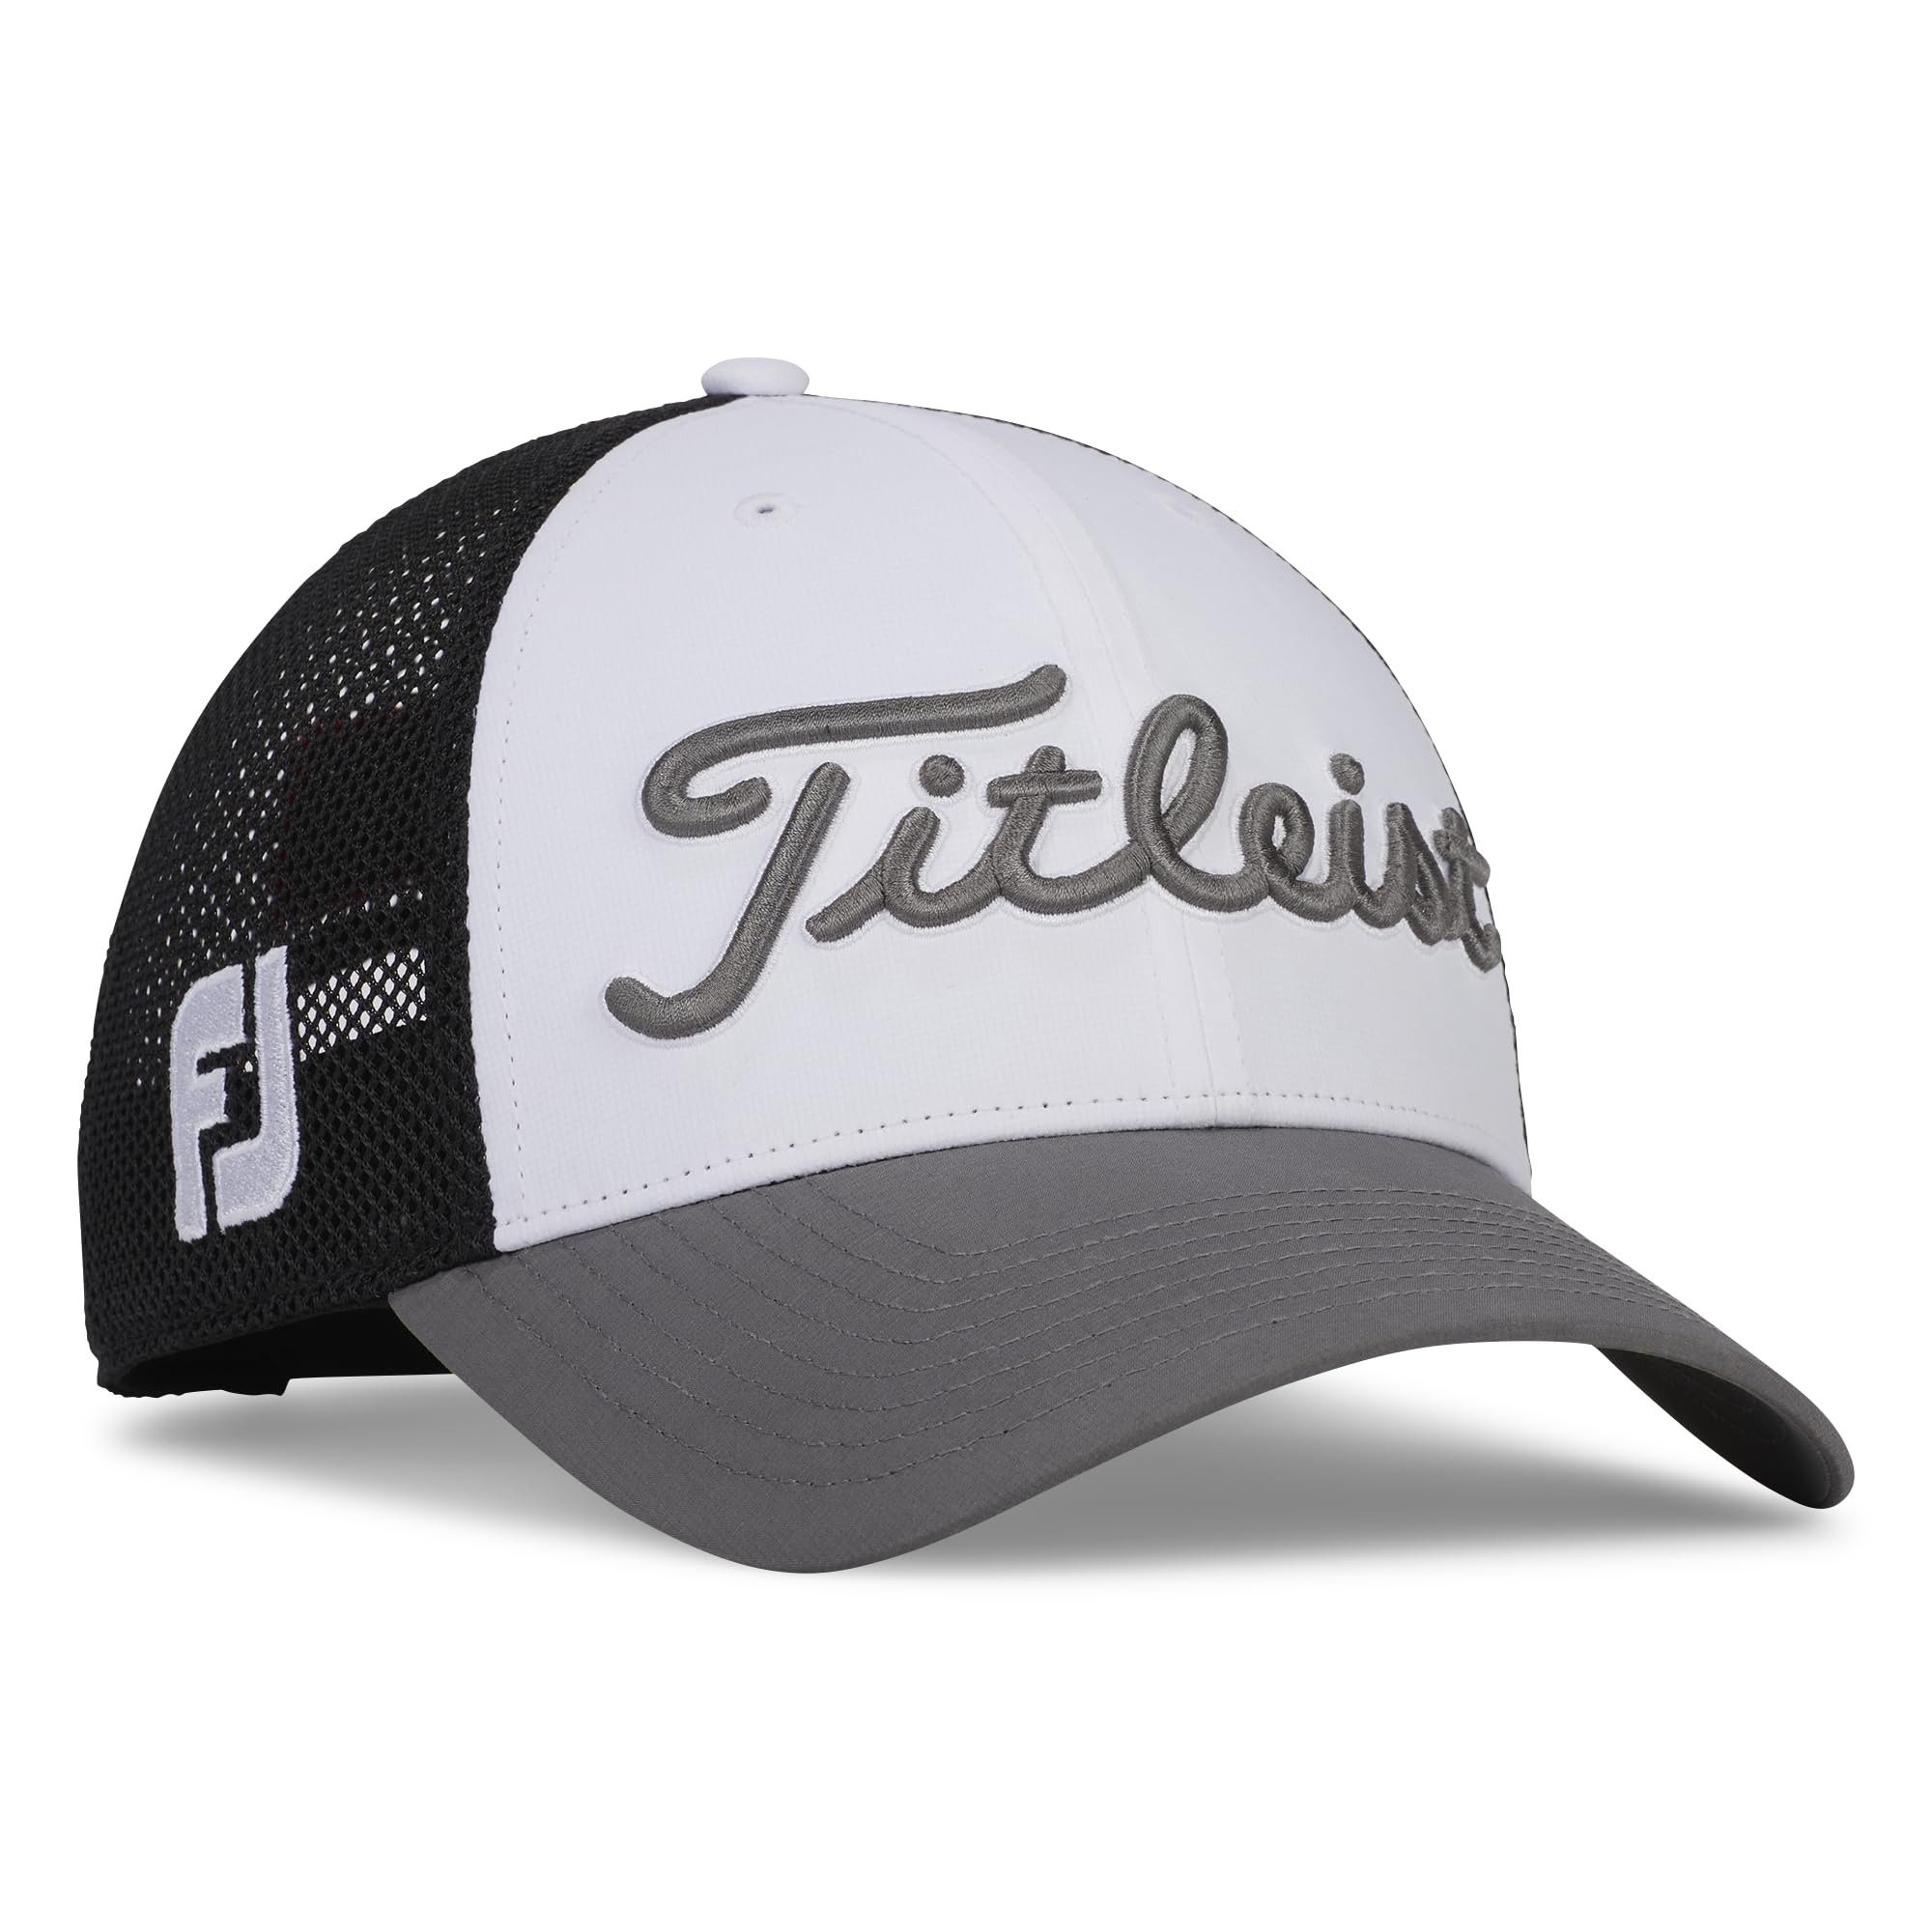 Titleist Men's Tour Performance Mesh Golf Hat